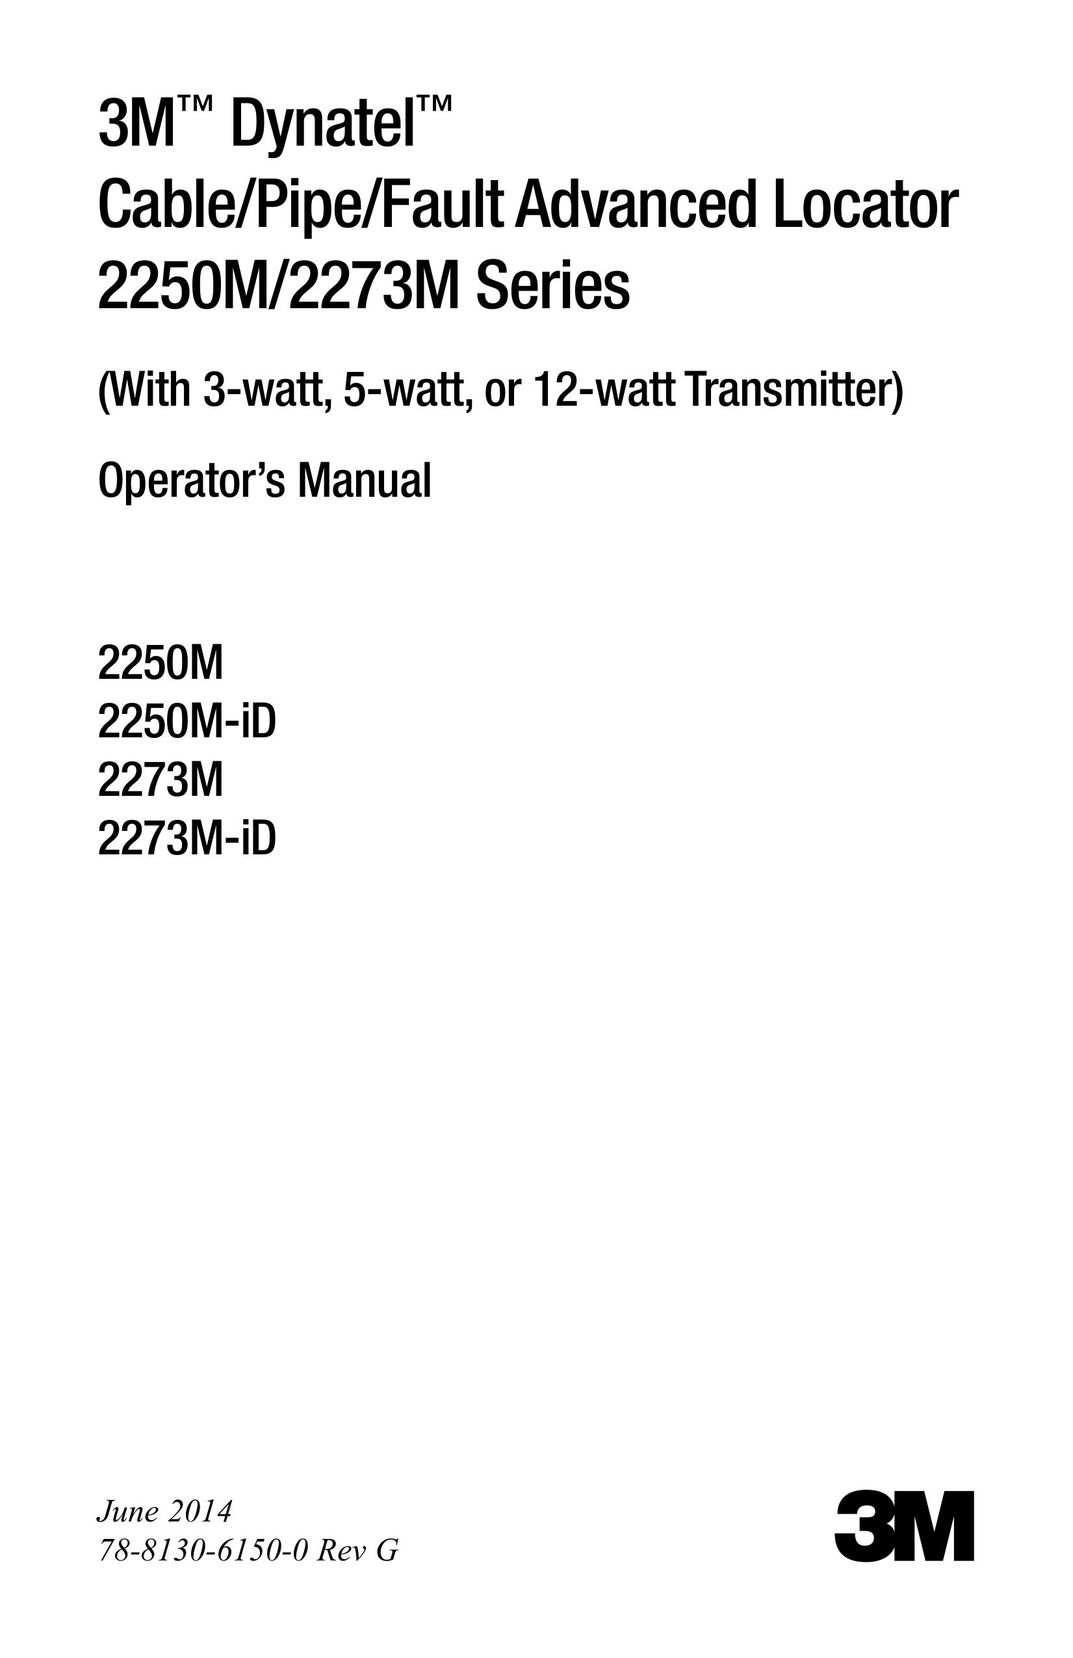 3M 2250M Cable Box User Manual